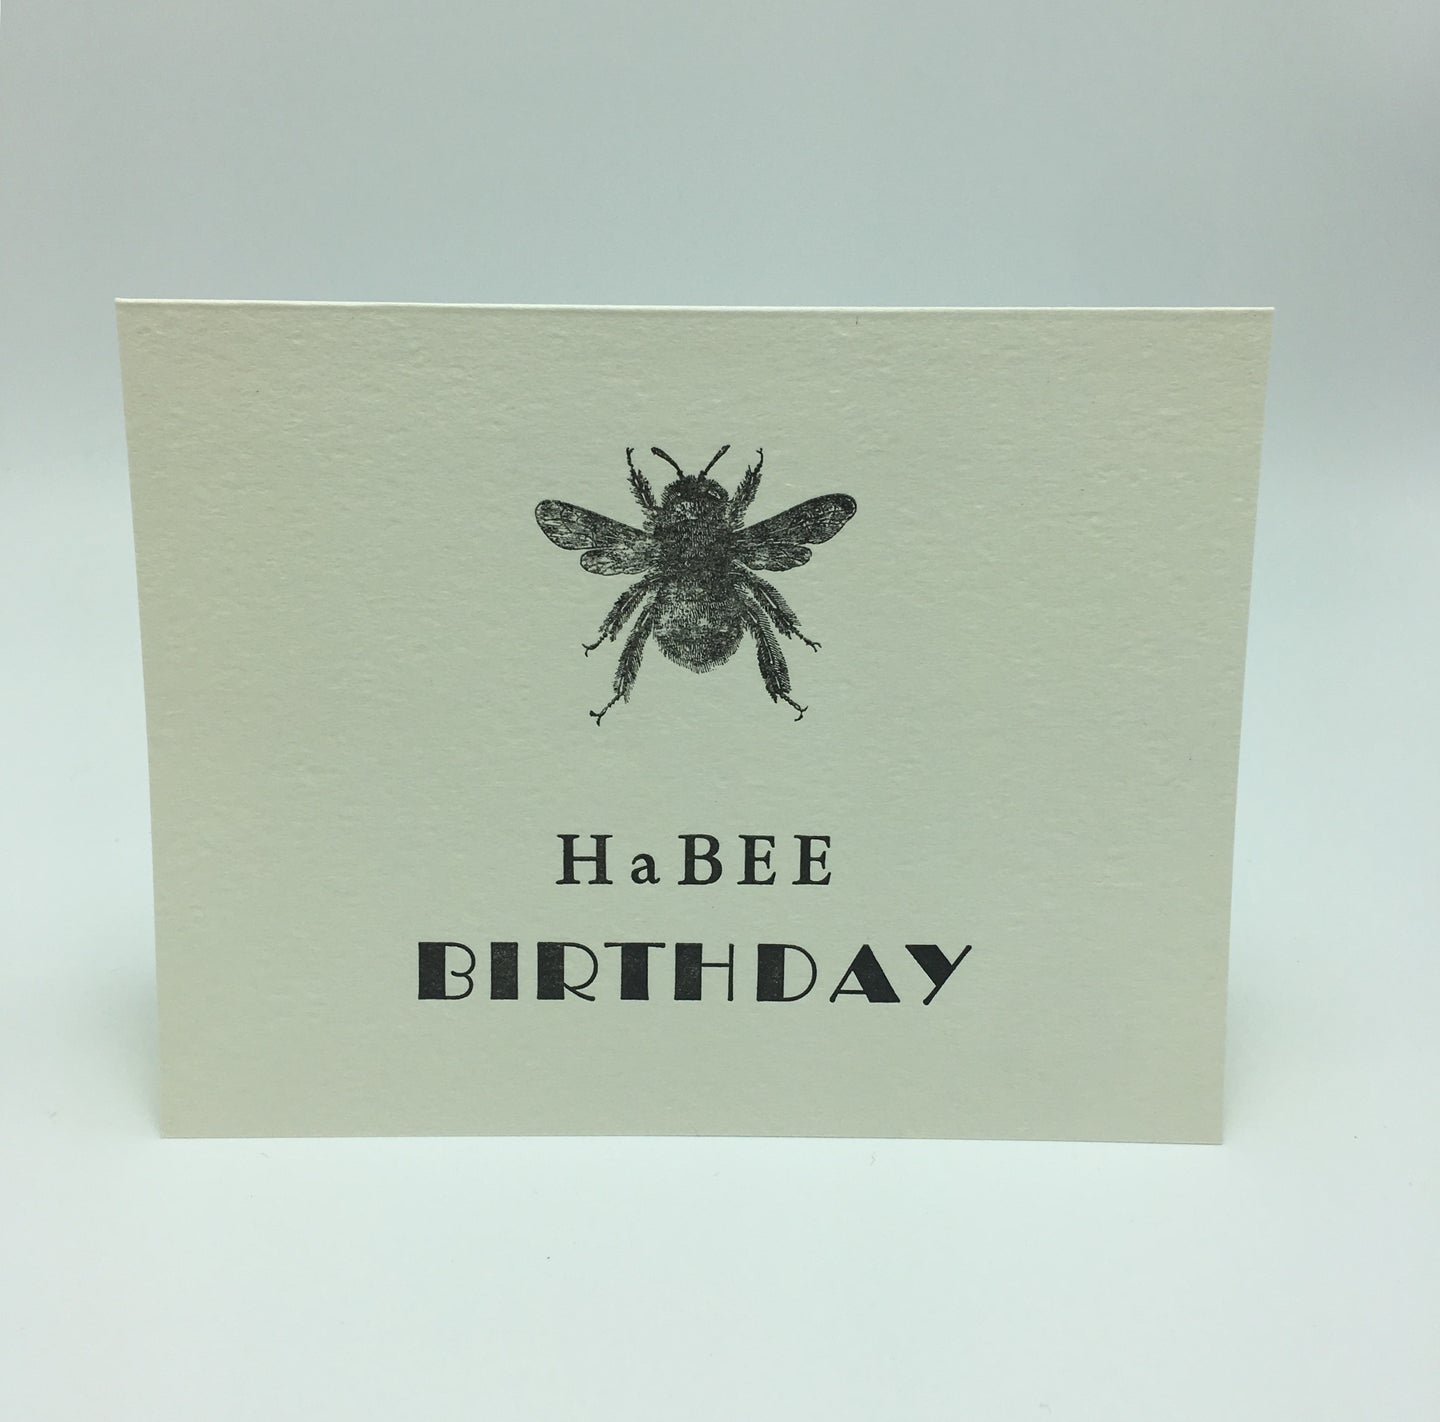 HaBee Birthday Card